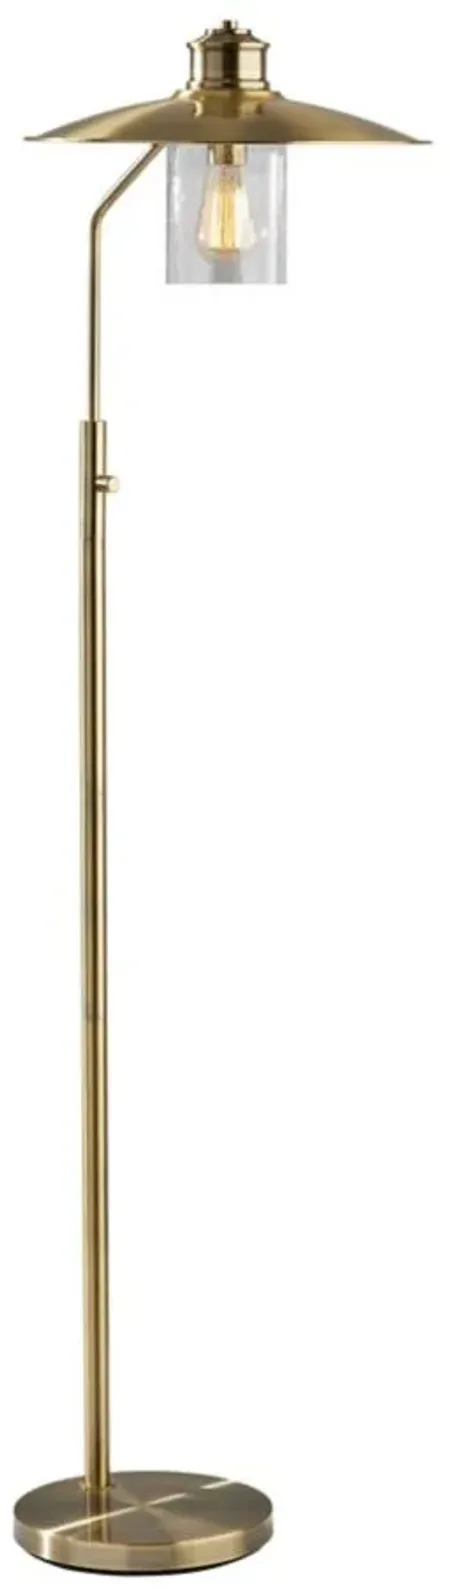 Kieran Floor Lamp in Antique Brass by Adesso Inc